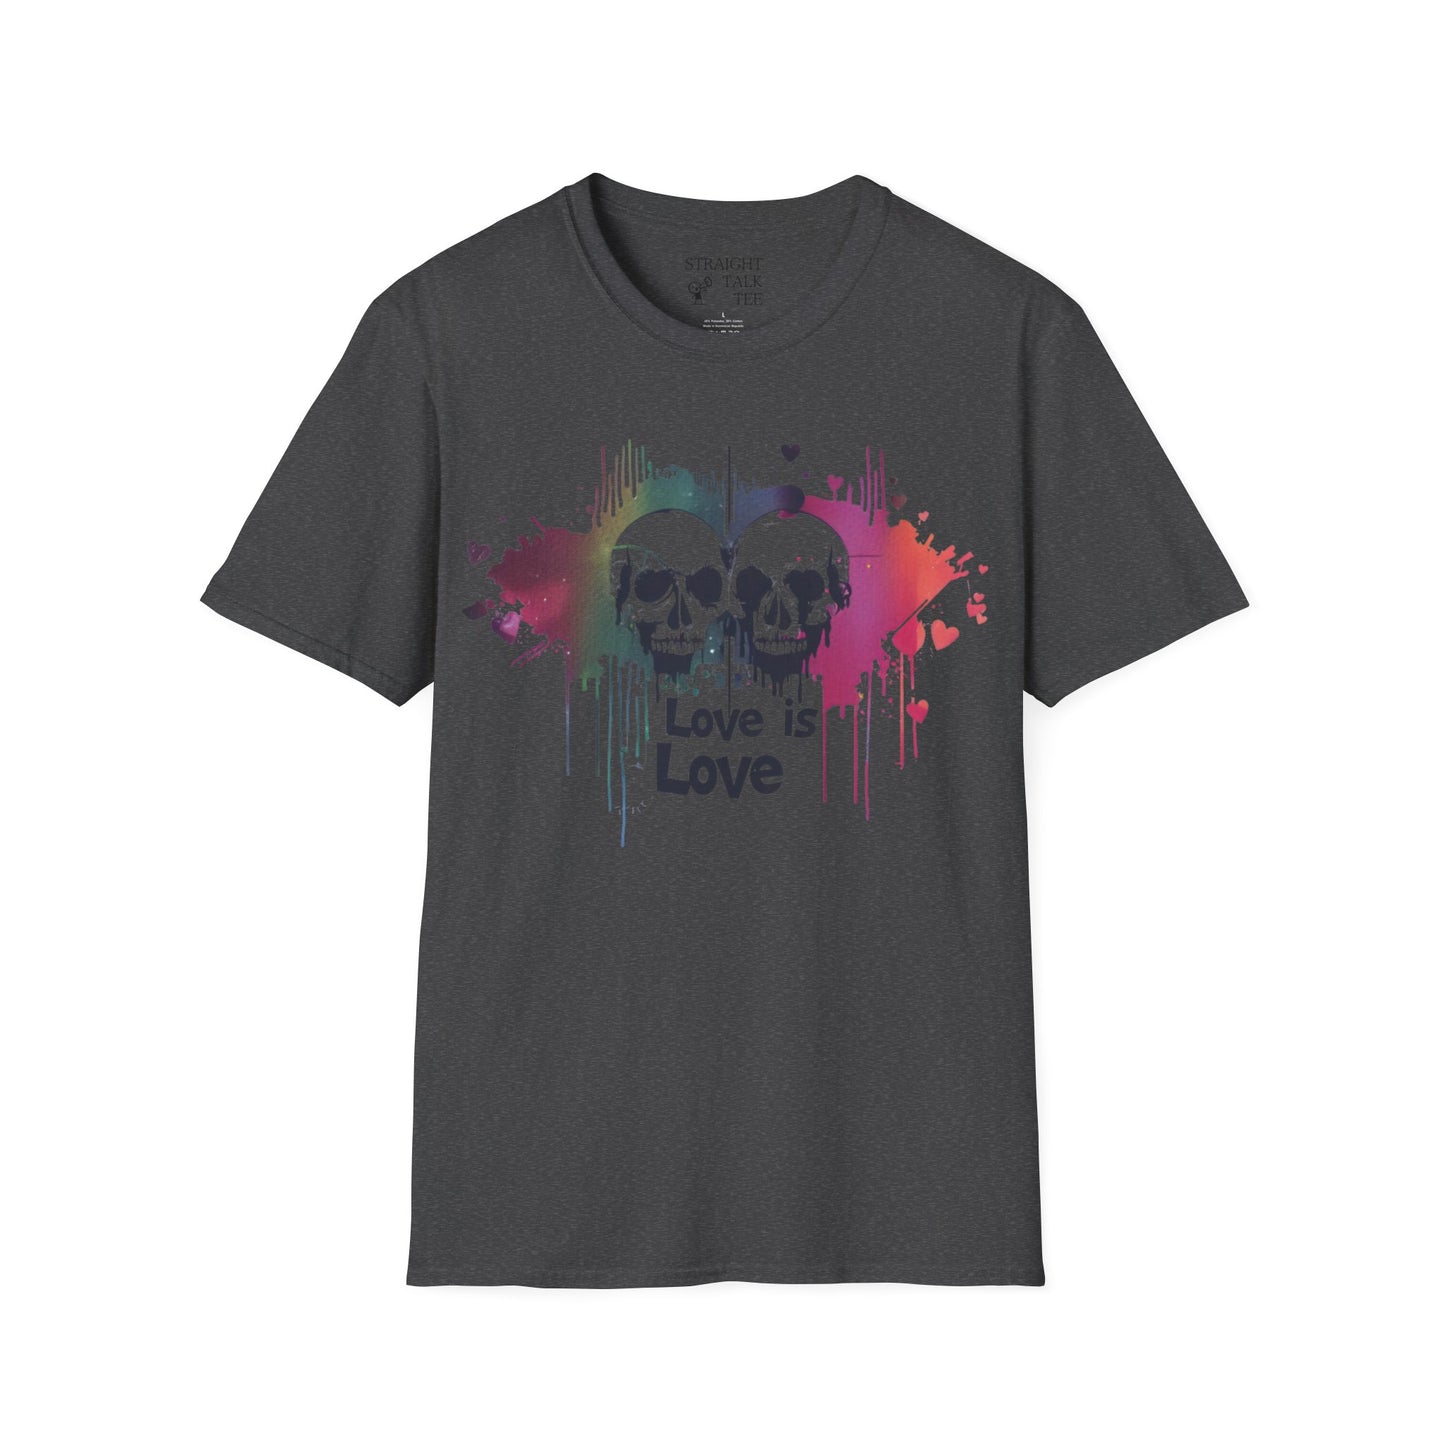 Love is Love Pride T-Shirt Political Skull Shirt Protest Punk Activism tshirt Statement Equality tee Leftist Liberal Shirt Vote